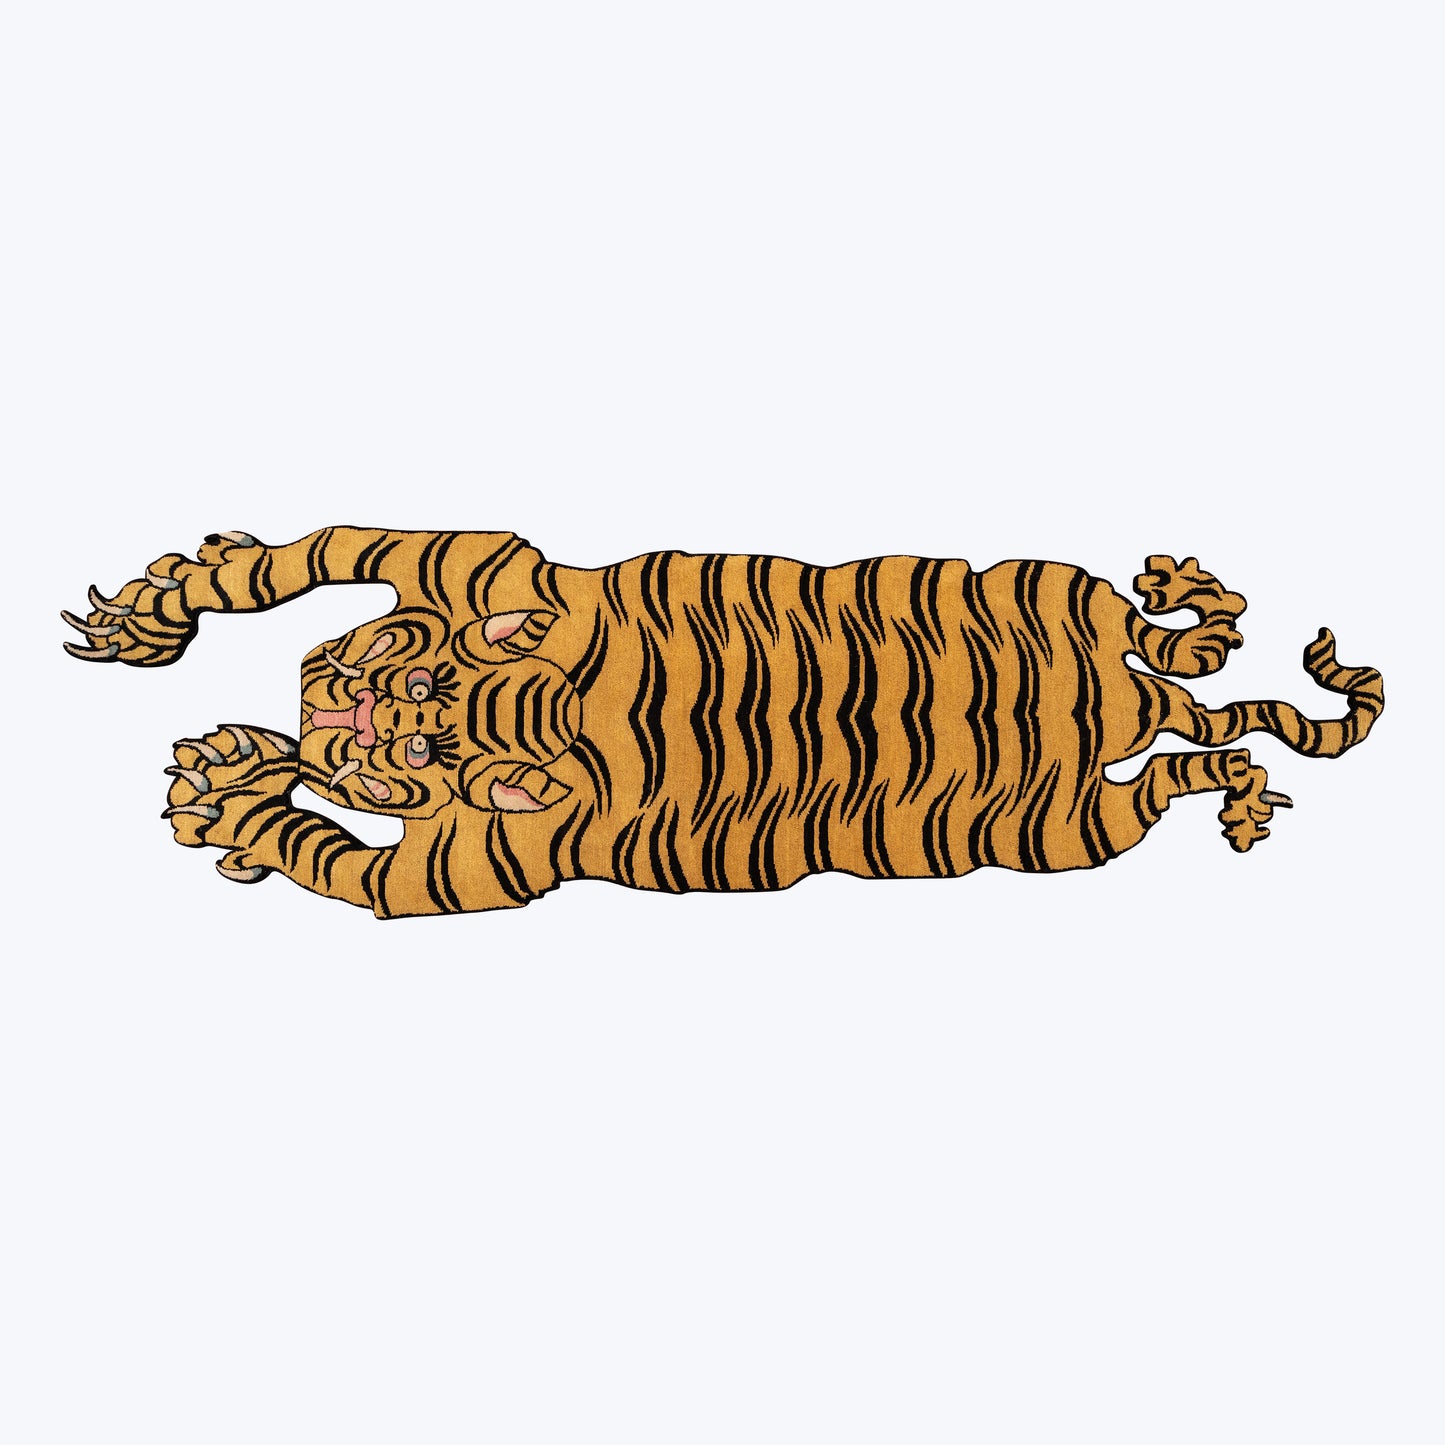 Roaring Tiger ‘Silhouette’ Carpet